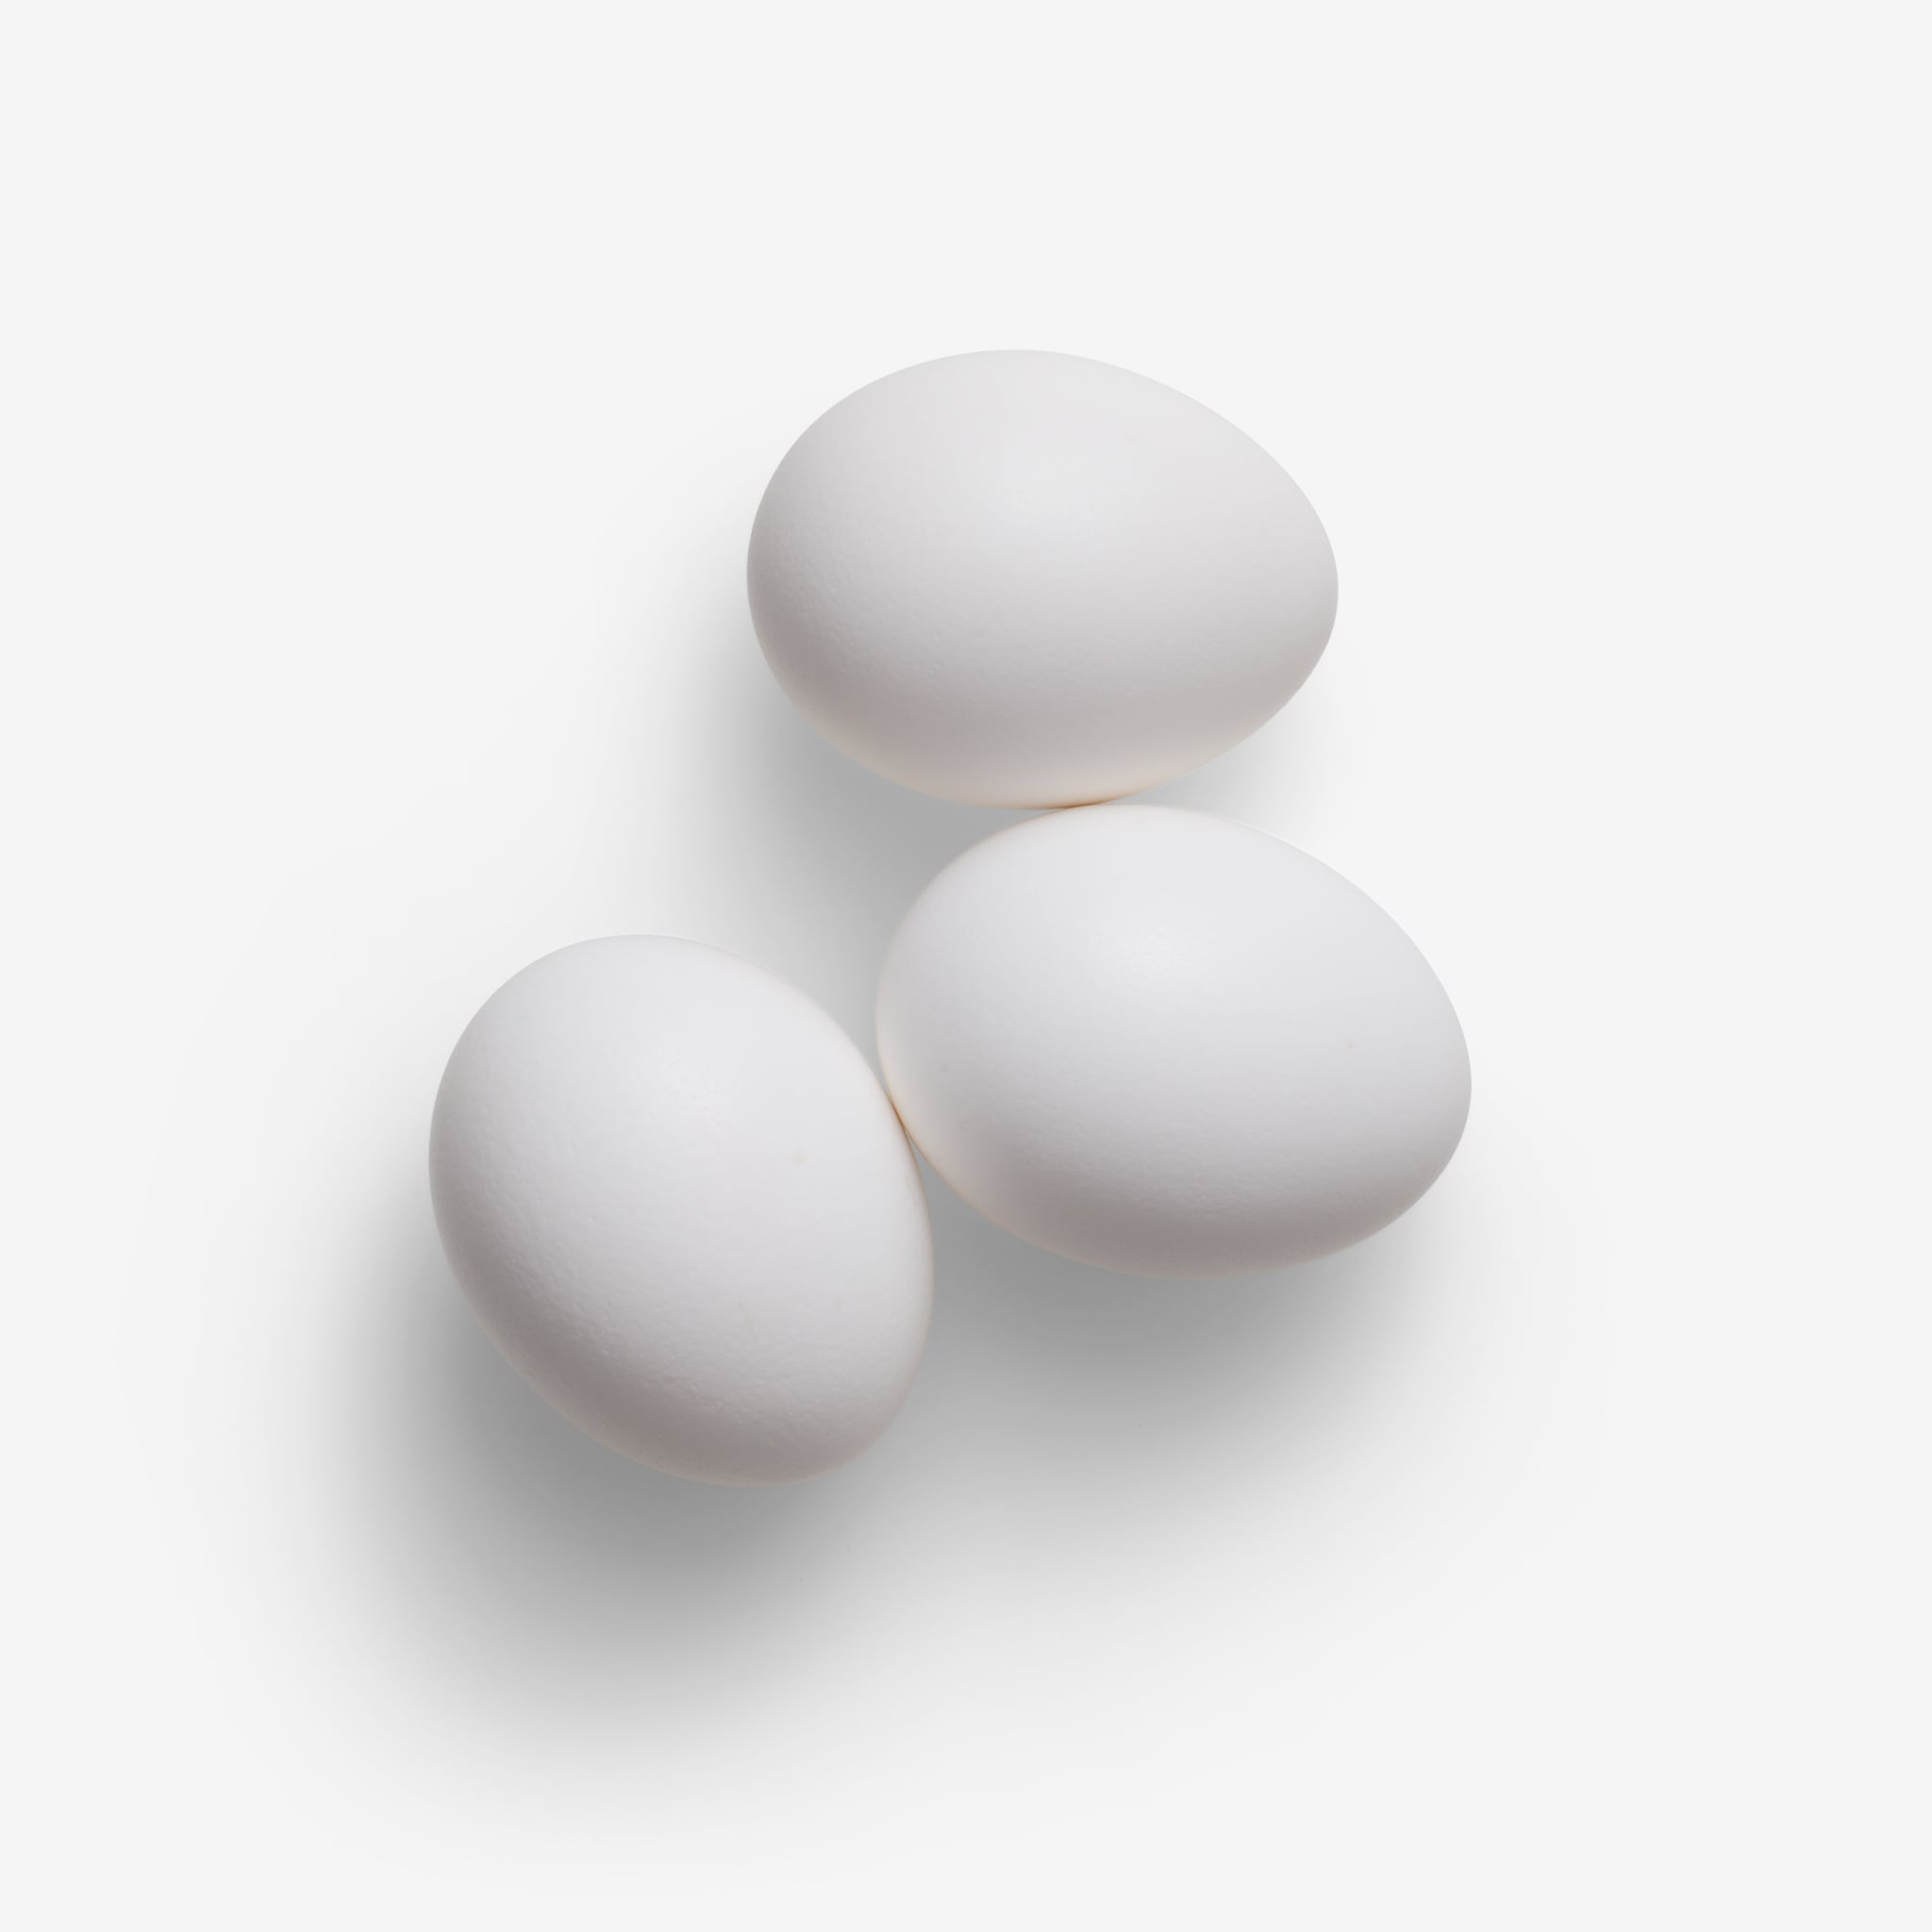 Egg PSD layered image